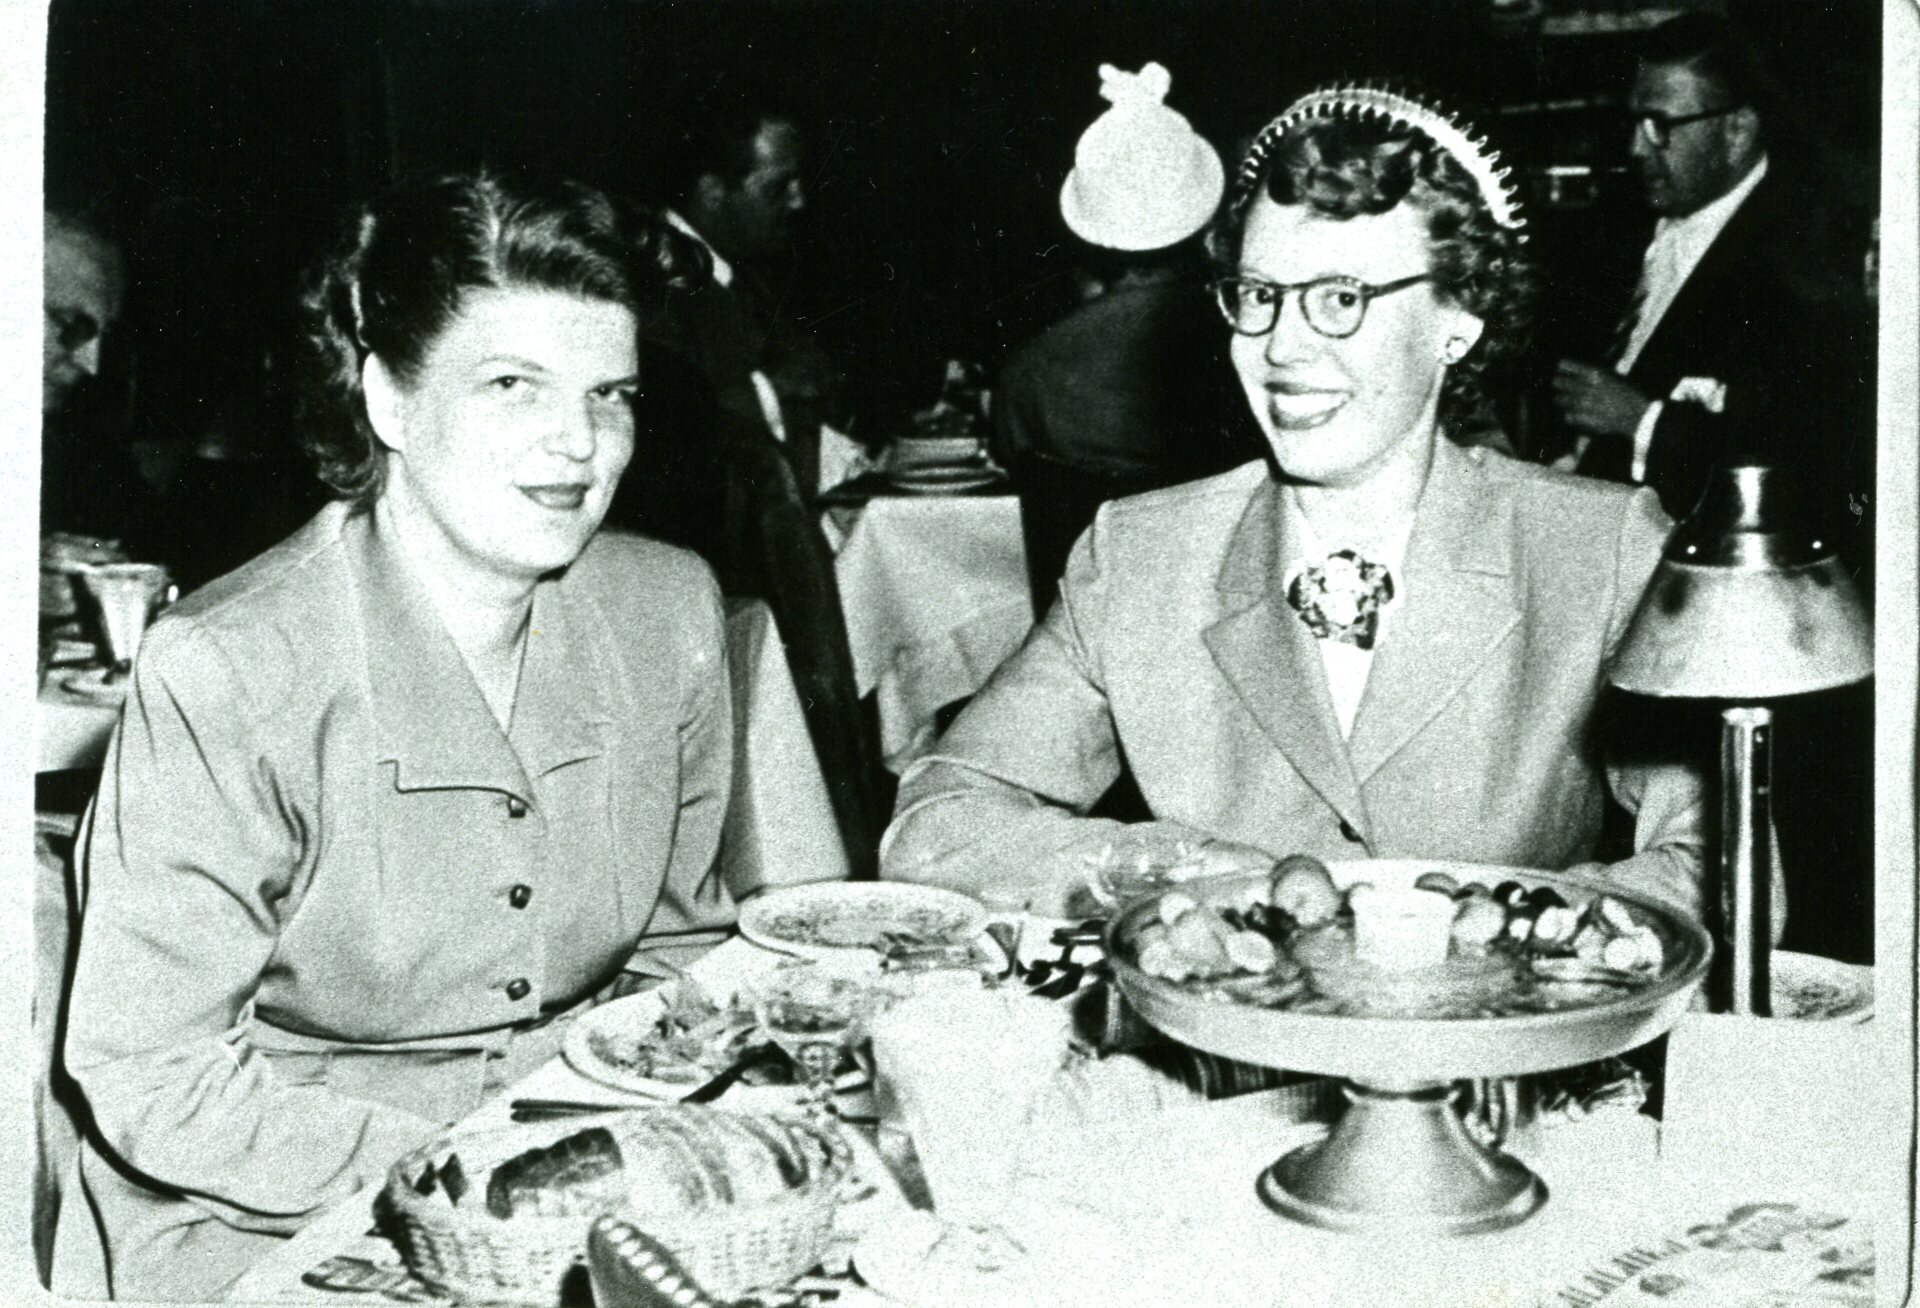 Martin and Lyon, 1950s